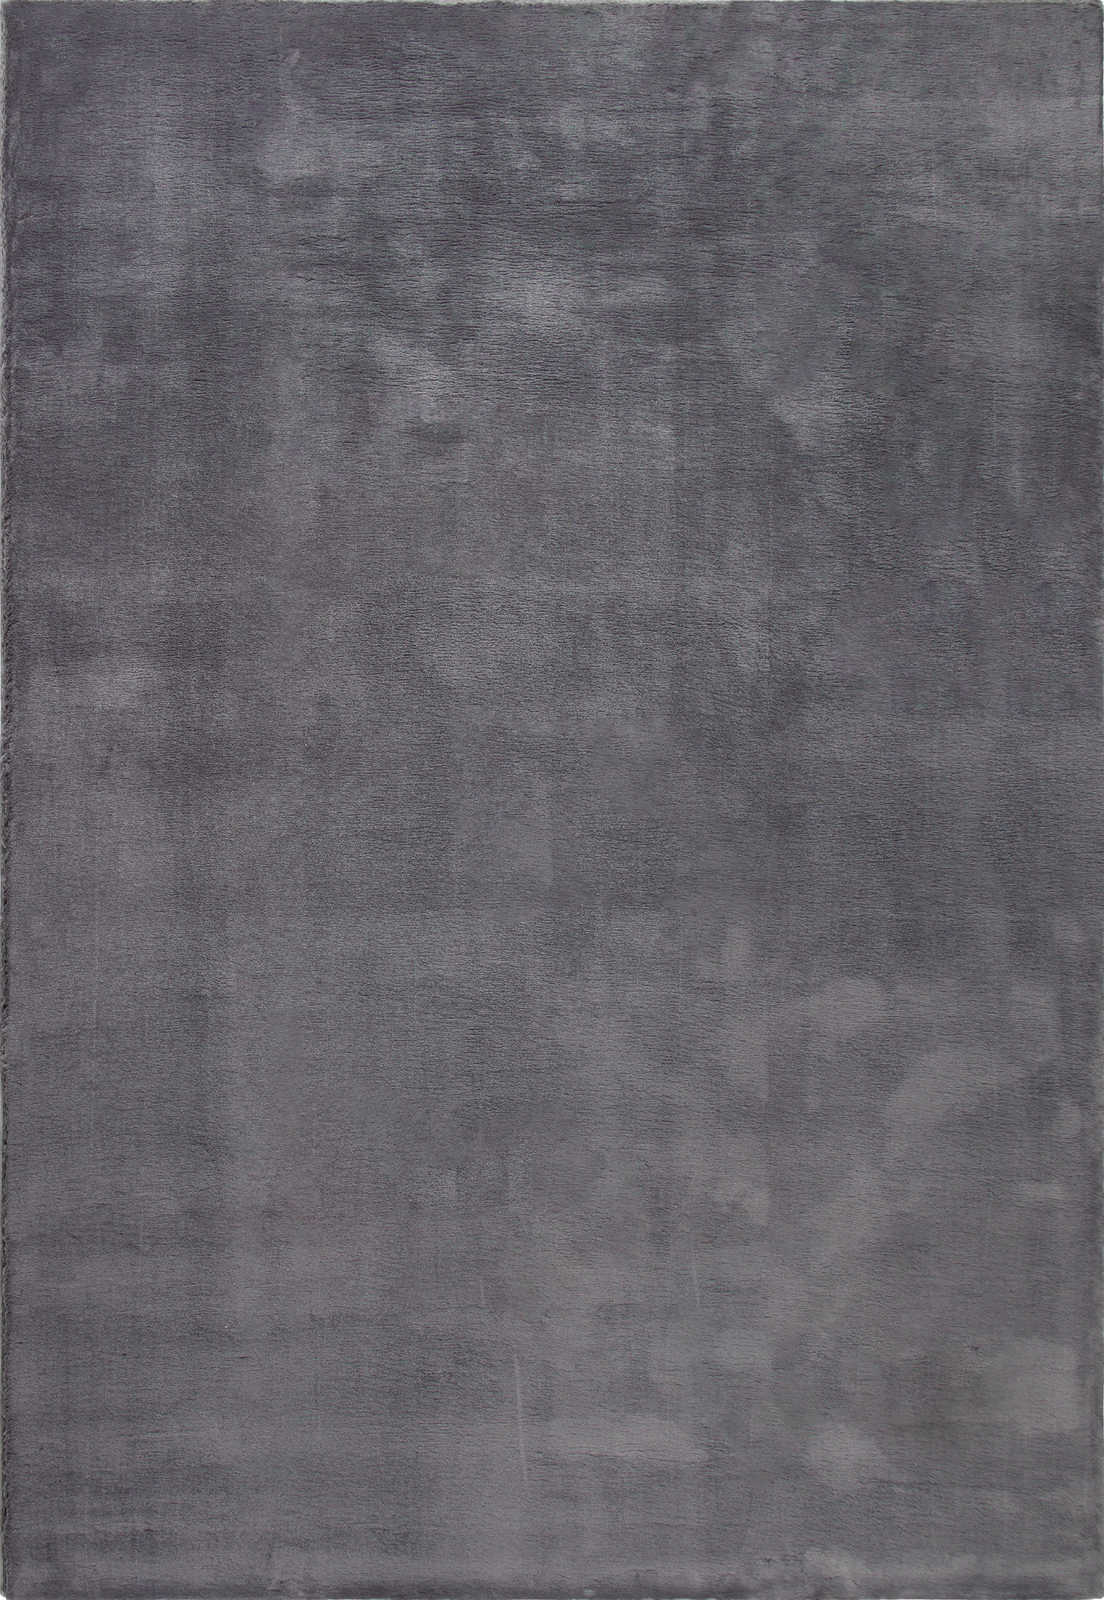             Tapis moderne à poils longs anthracite - 200 x 140 cm
        